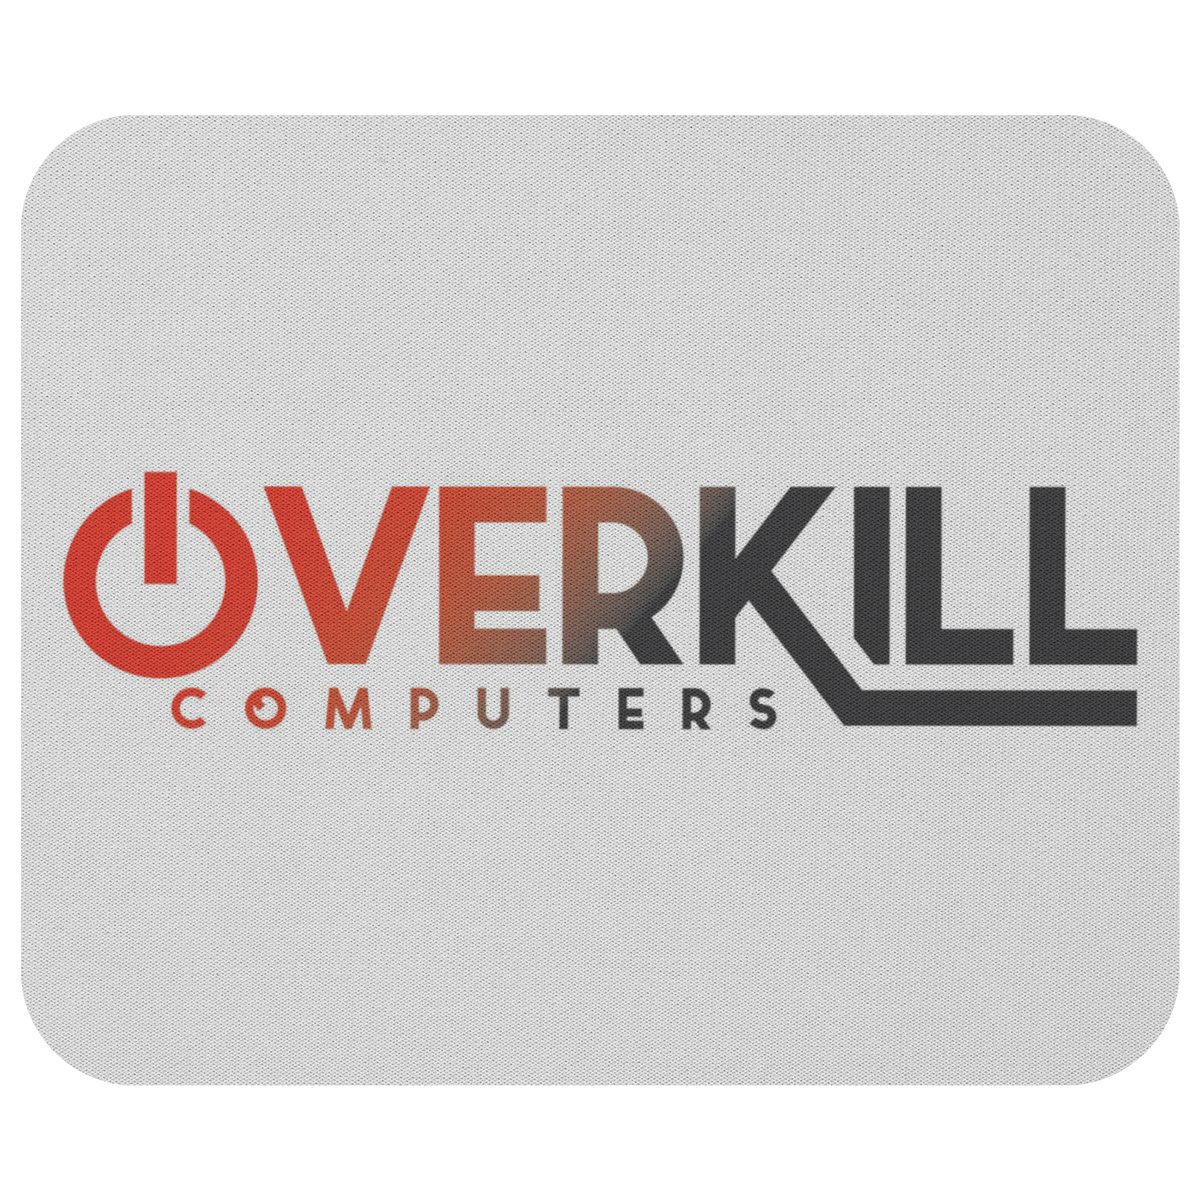 overkill computers